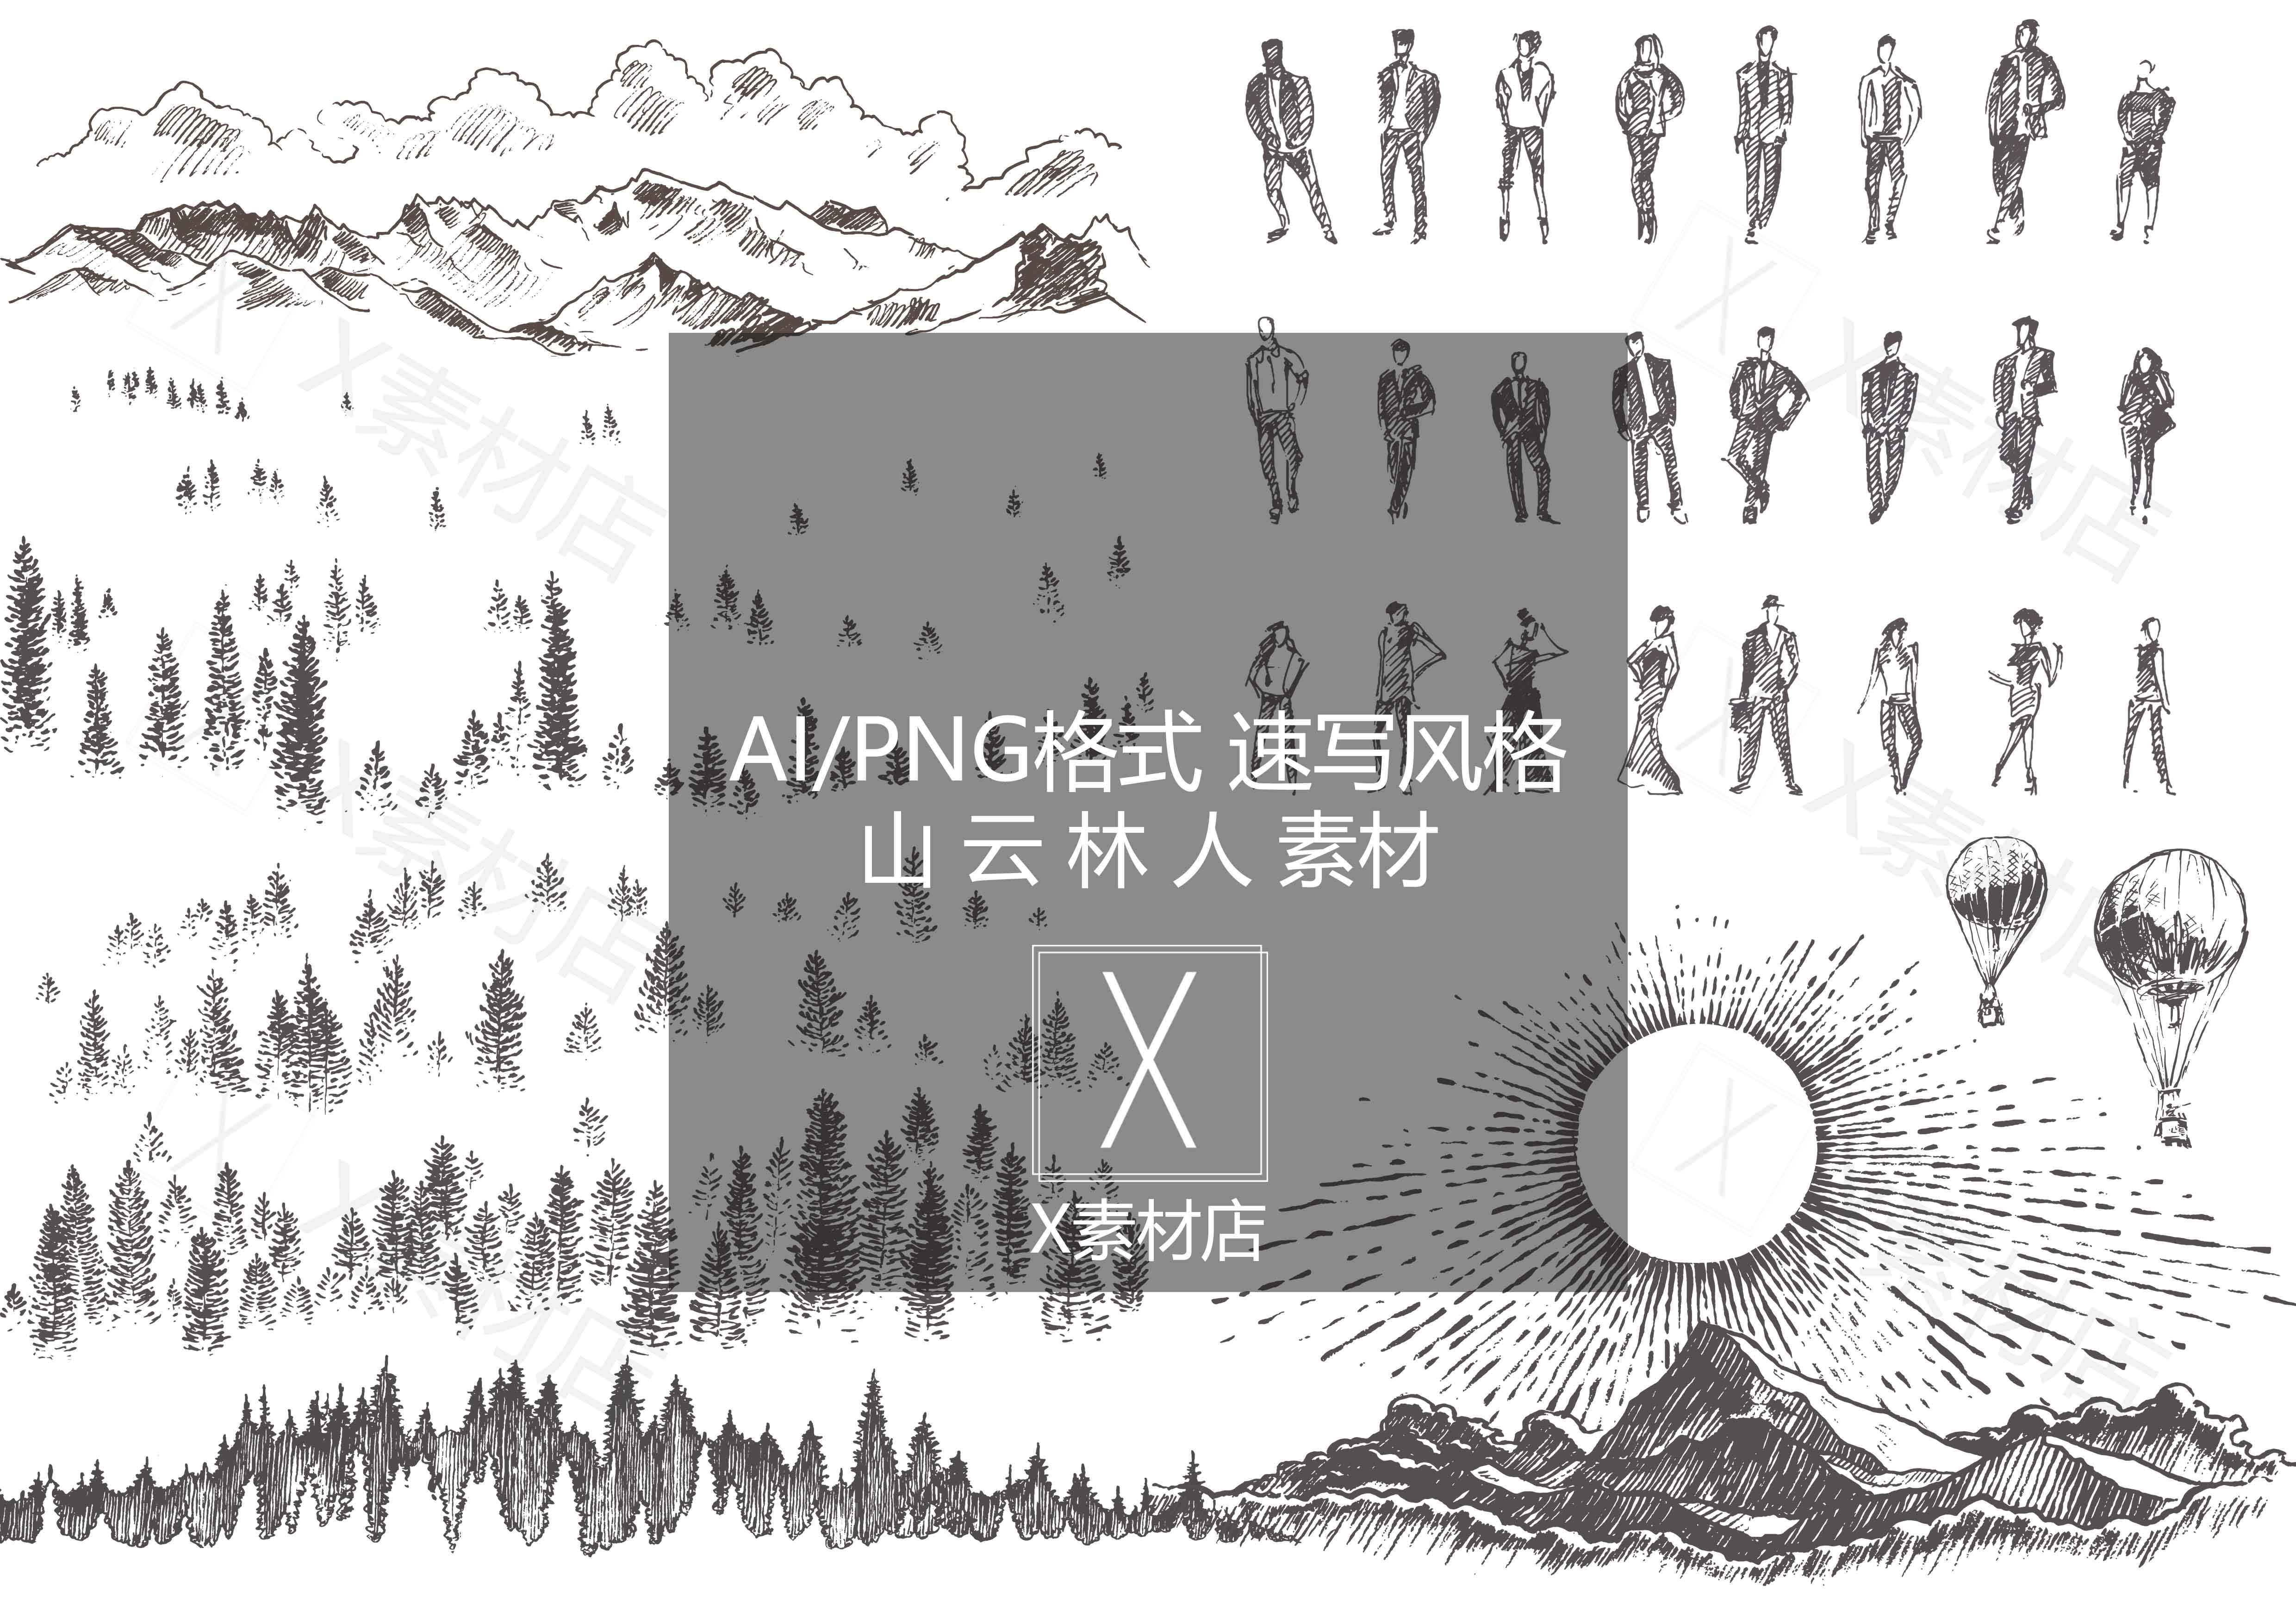 AI/PNG 速写风格手绘 山湖海林人物 复古版画拼贴collage